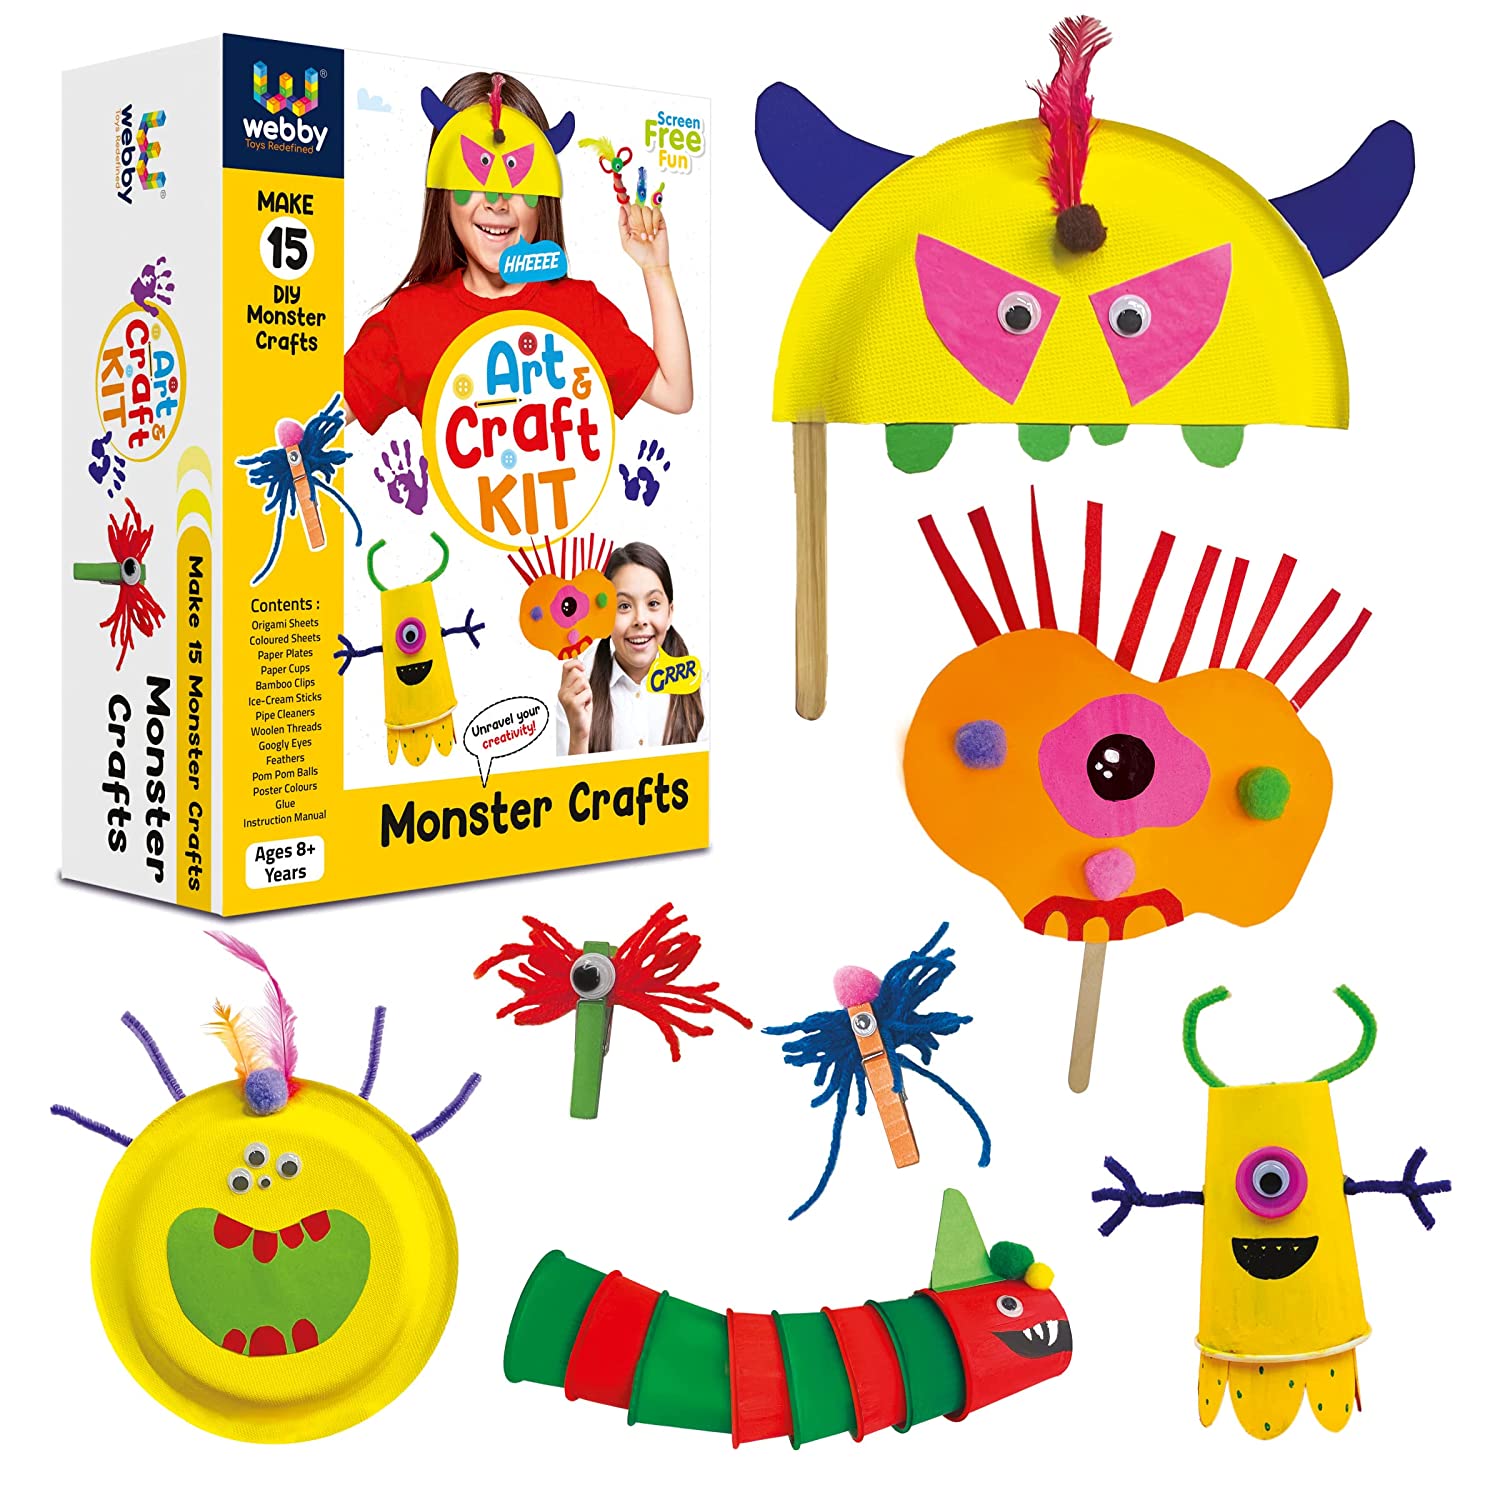 Craft Supplies Toddlers, Paper Plate Craft Kits, Toddler Art Supplies